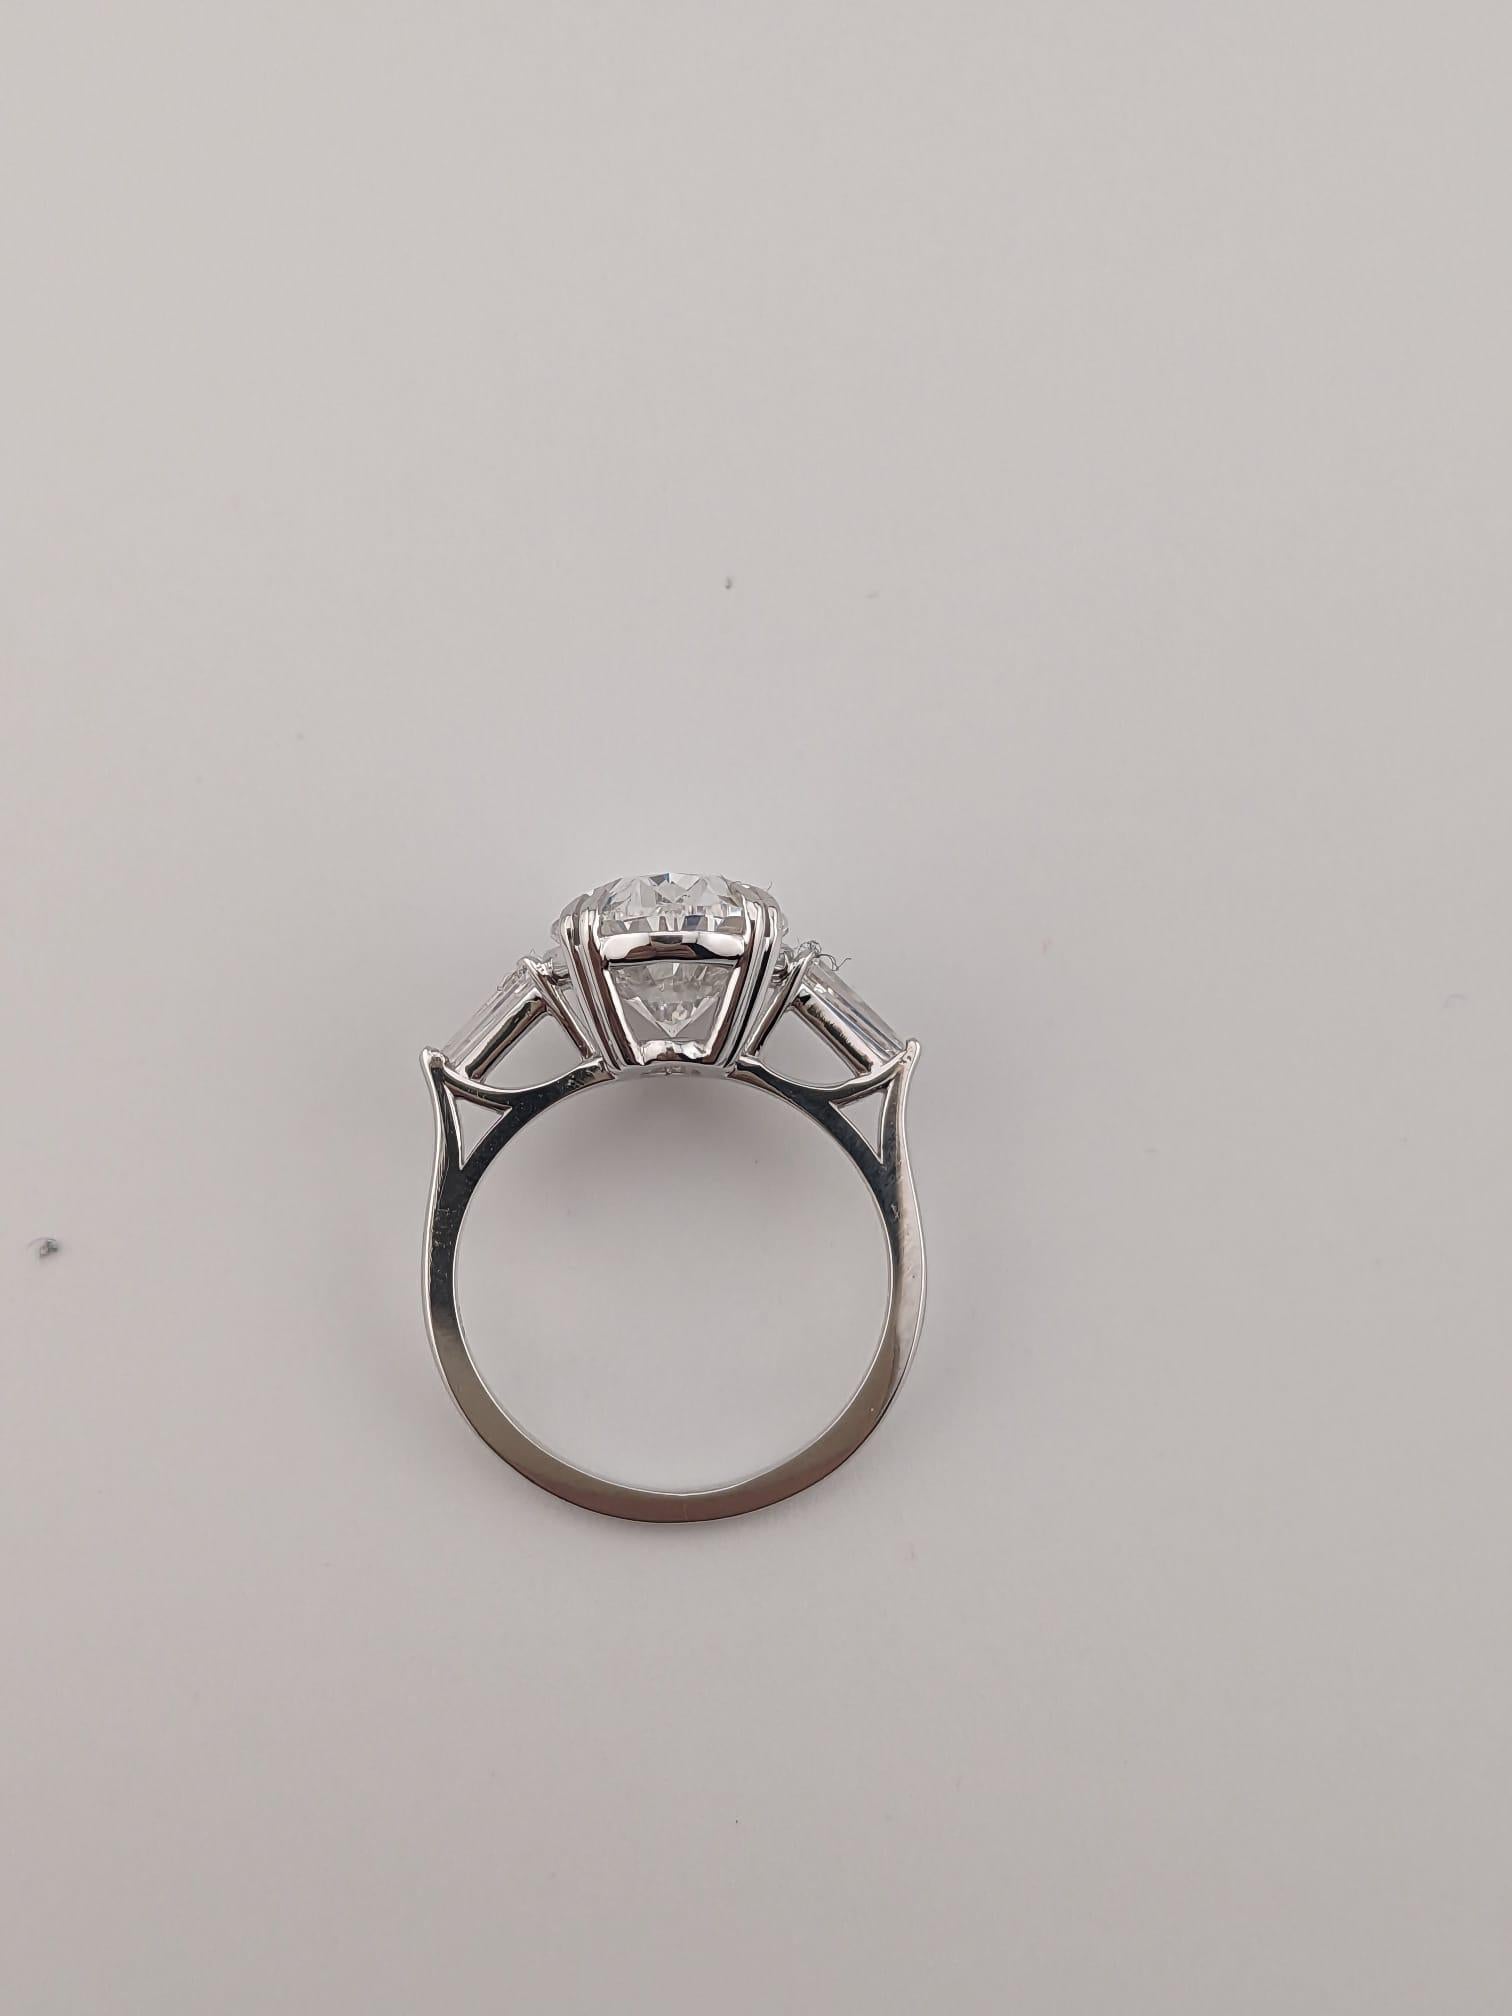 4ct diamond ring